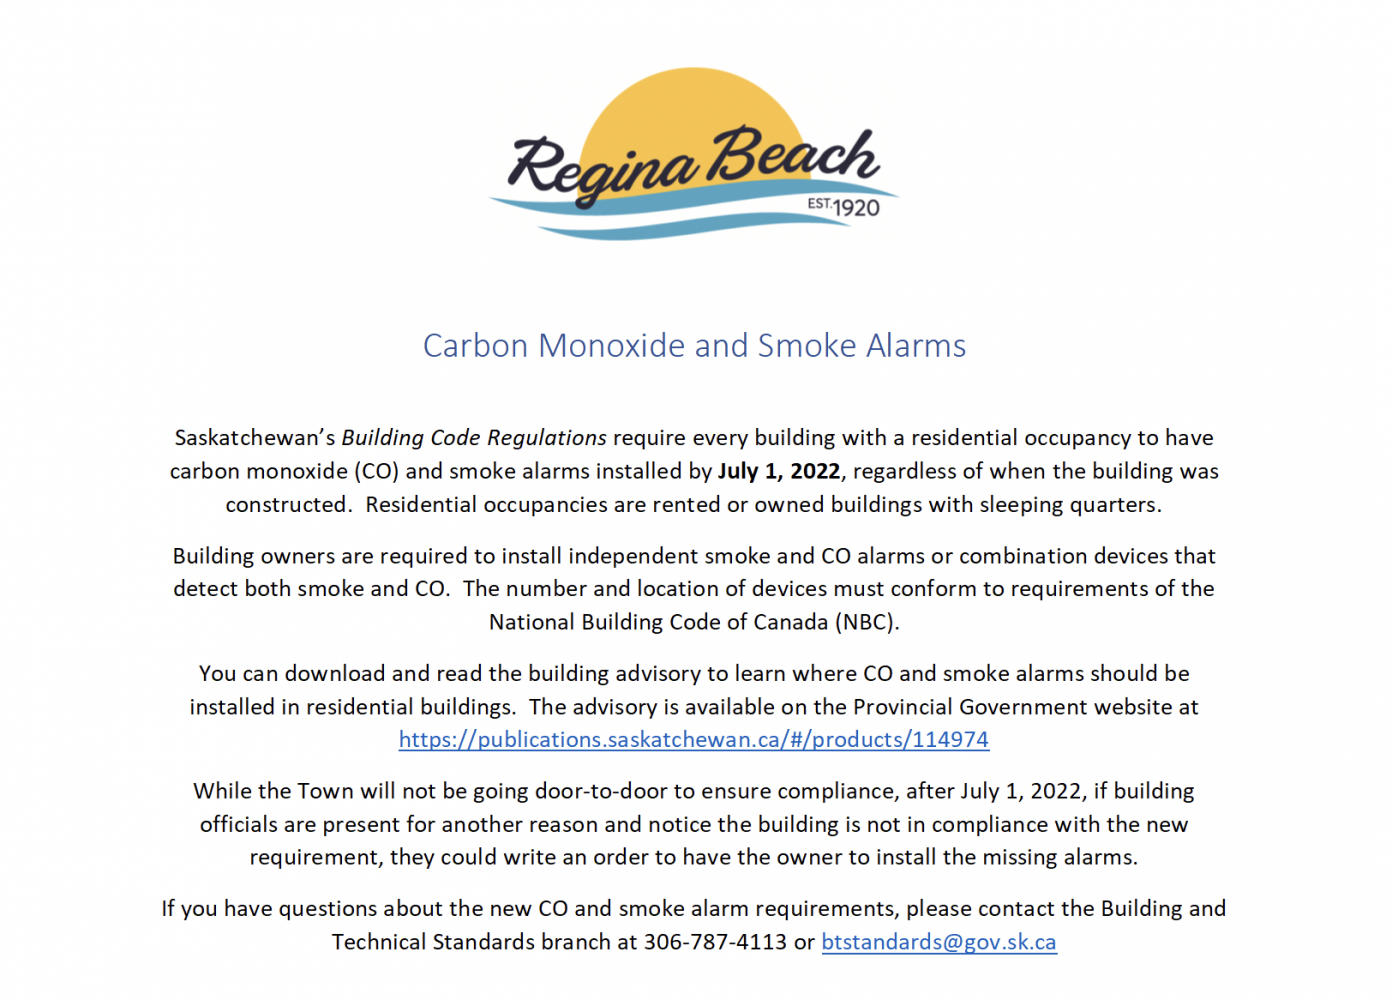 Carbon Monoxide & Smoke Alarms - Construction Codes Advisory